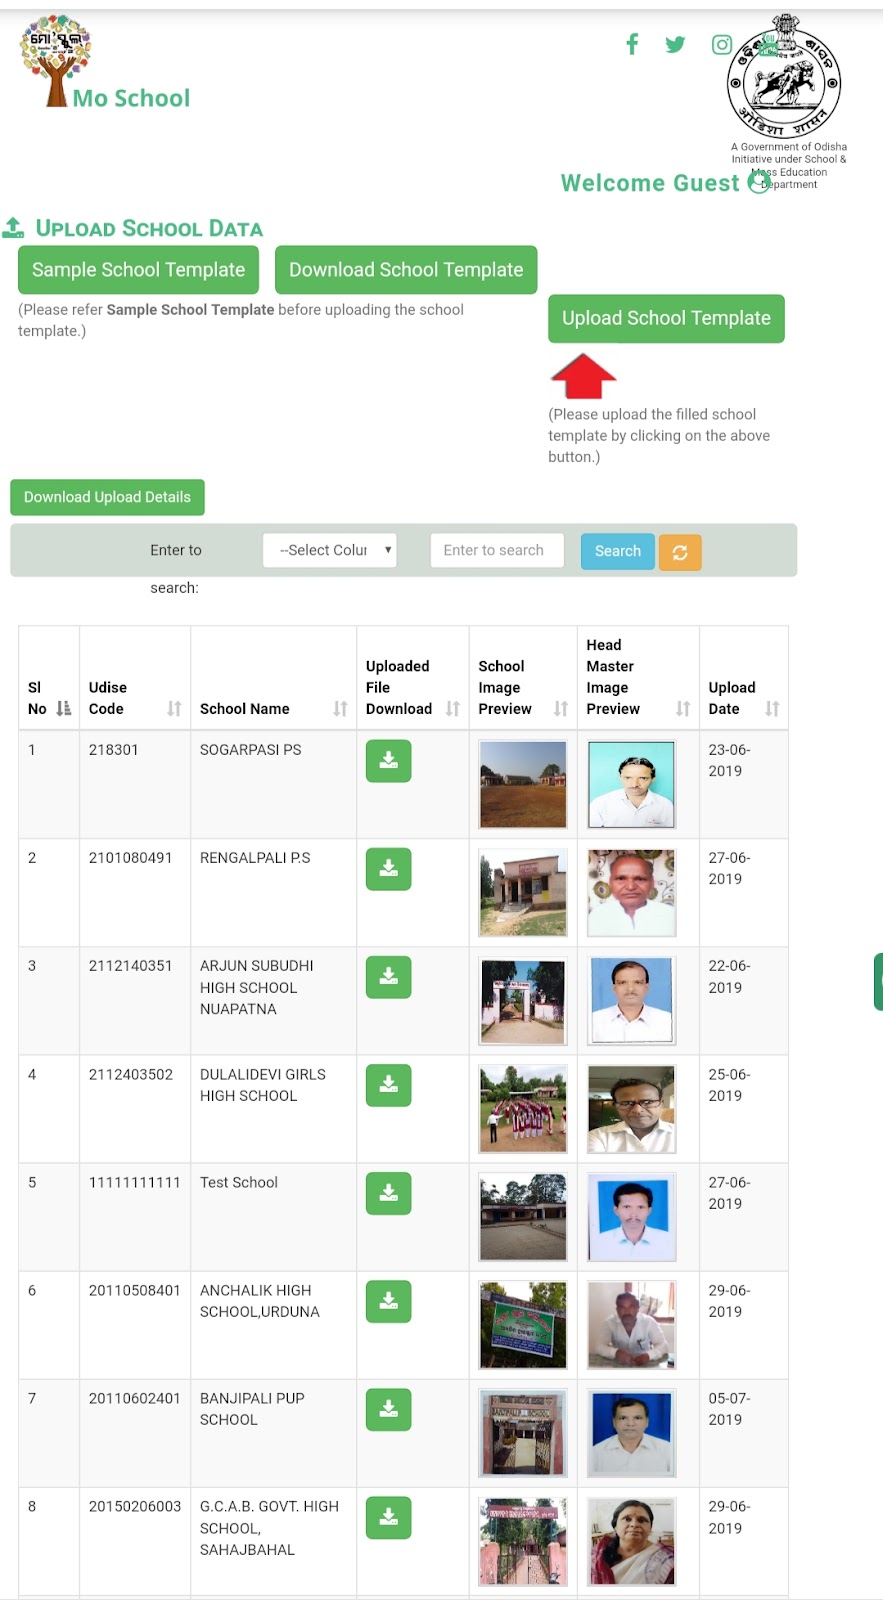 Upload School Template Under Mo School Site Govt Of Odisha My